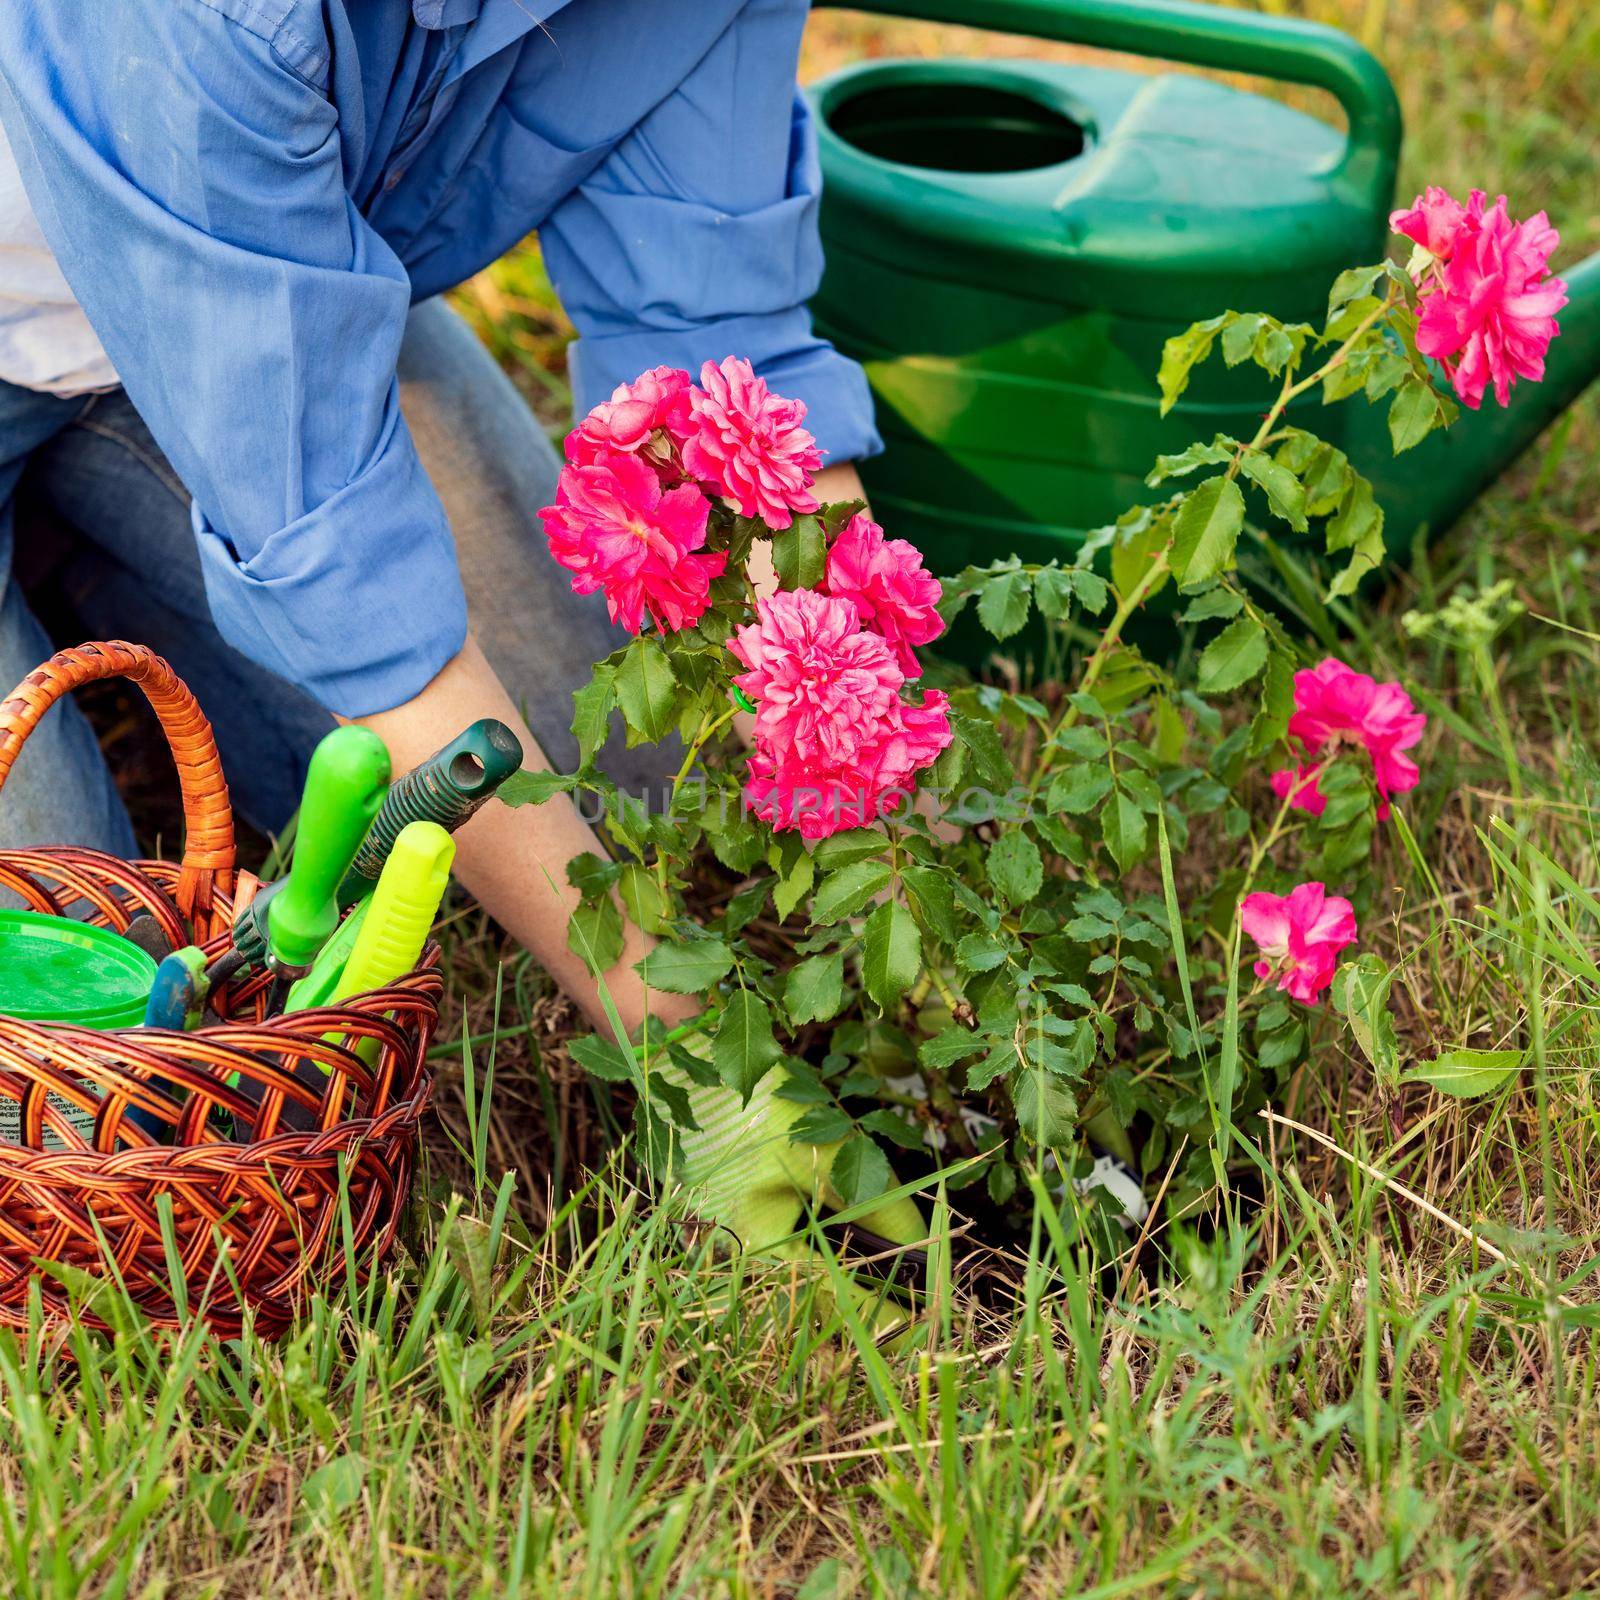 Woman gardener planting a sapling of red rose